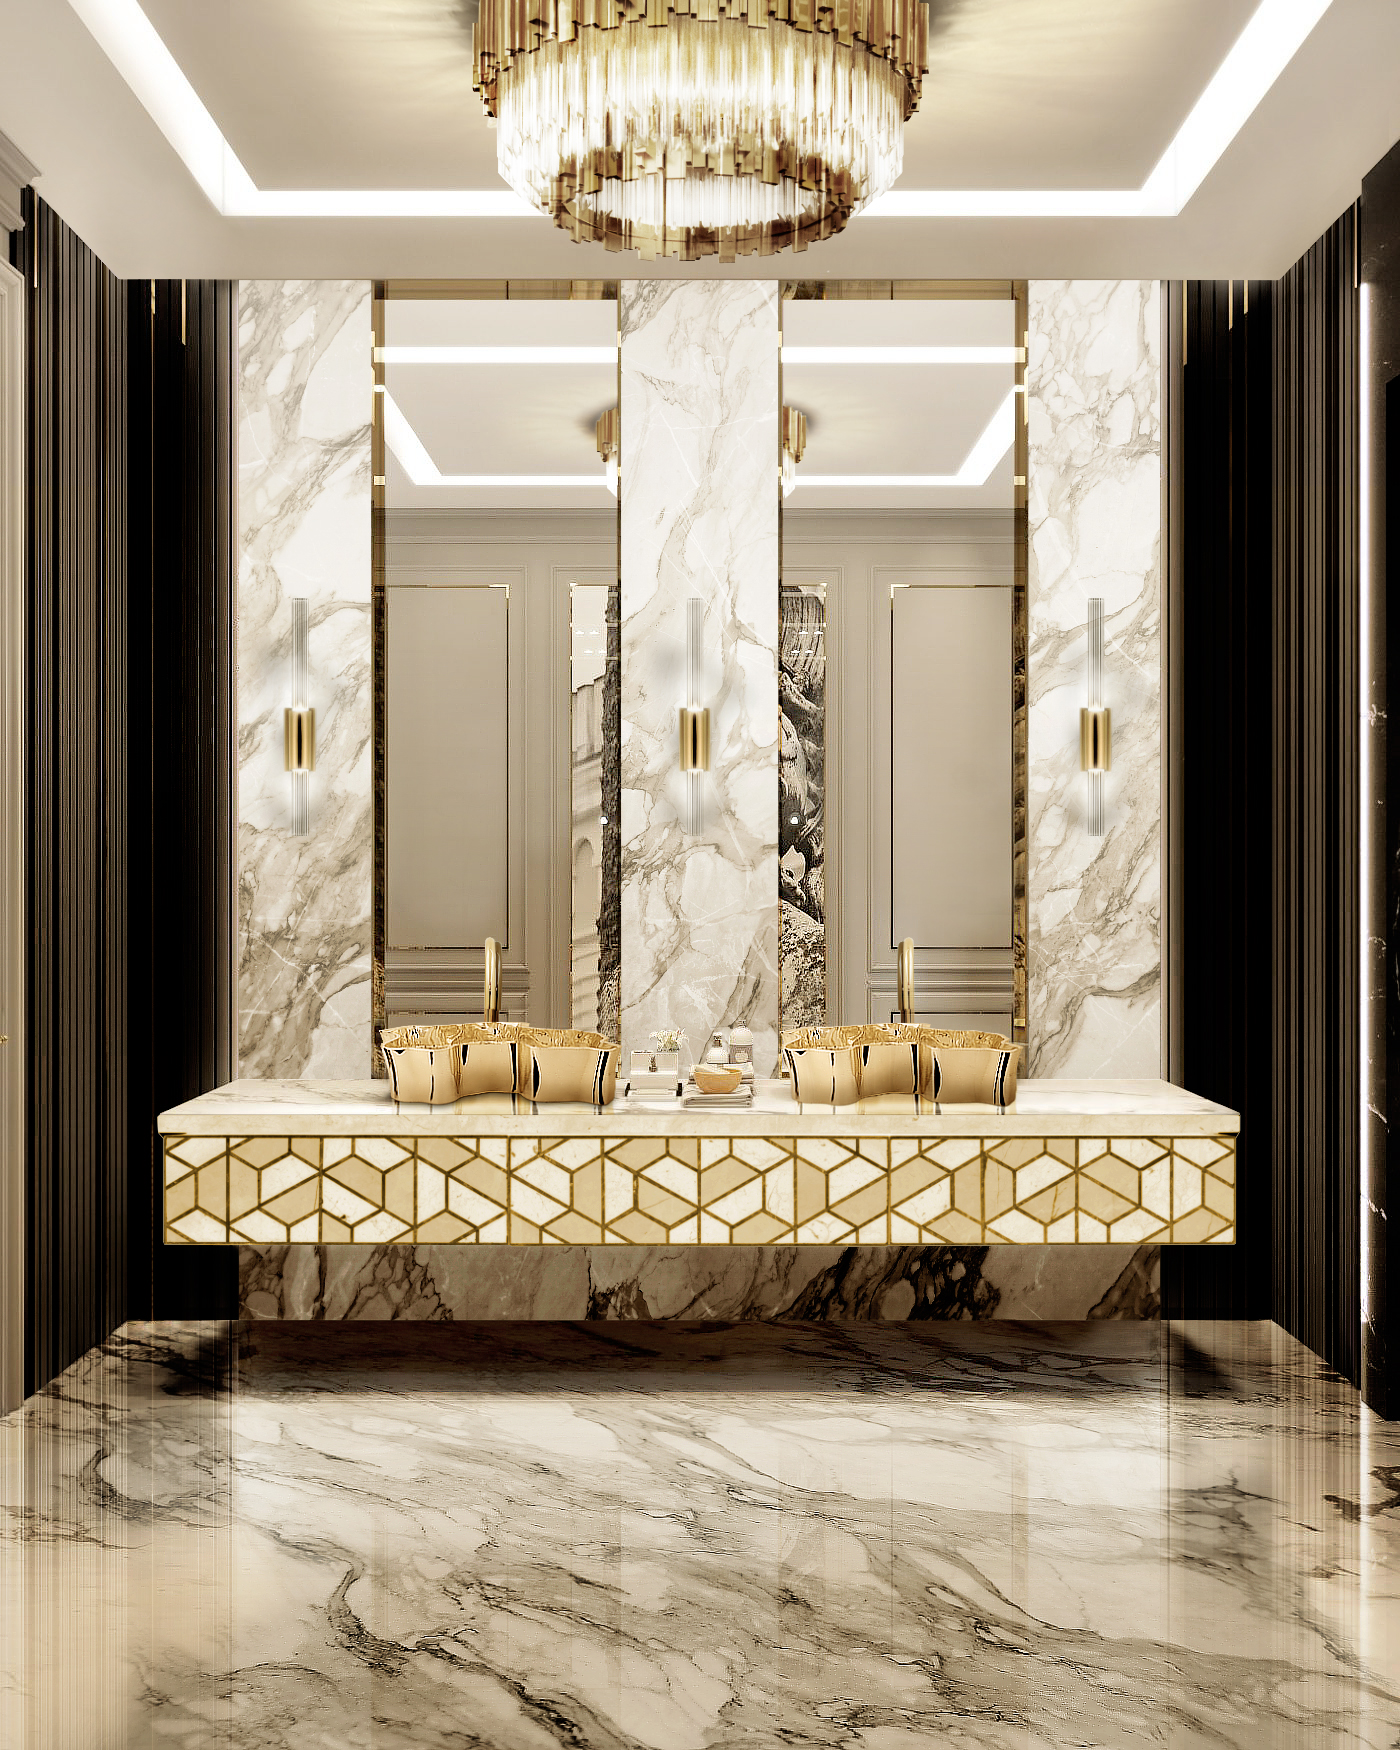 2021 2022 Bathroom Tile Trends, Latest Bathroom Tiles Design 2021 Indiana